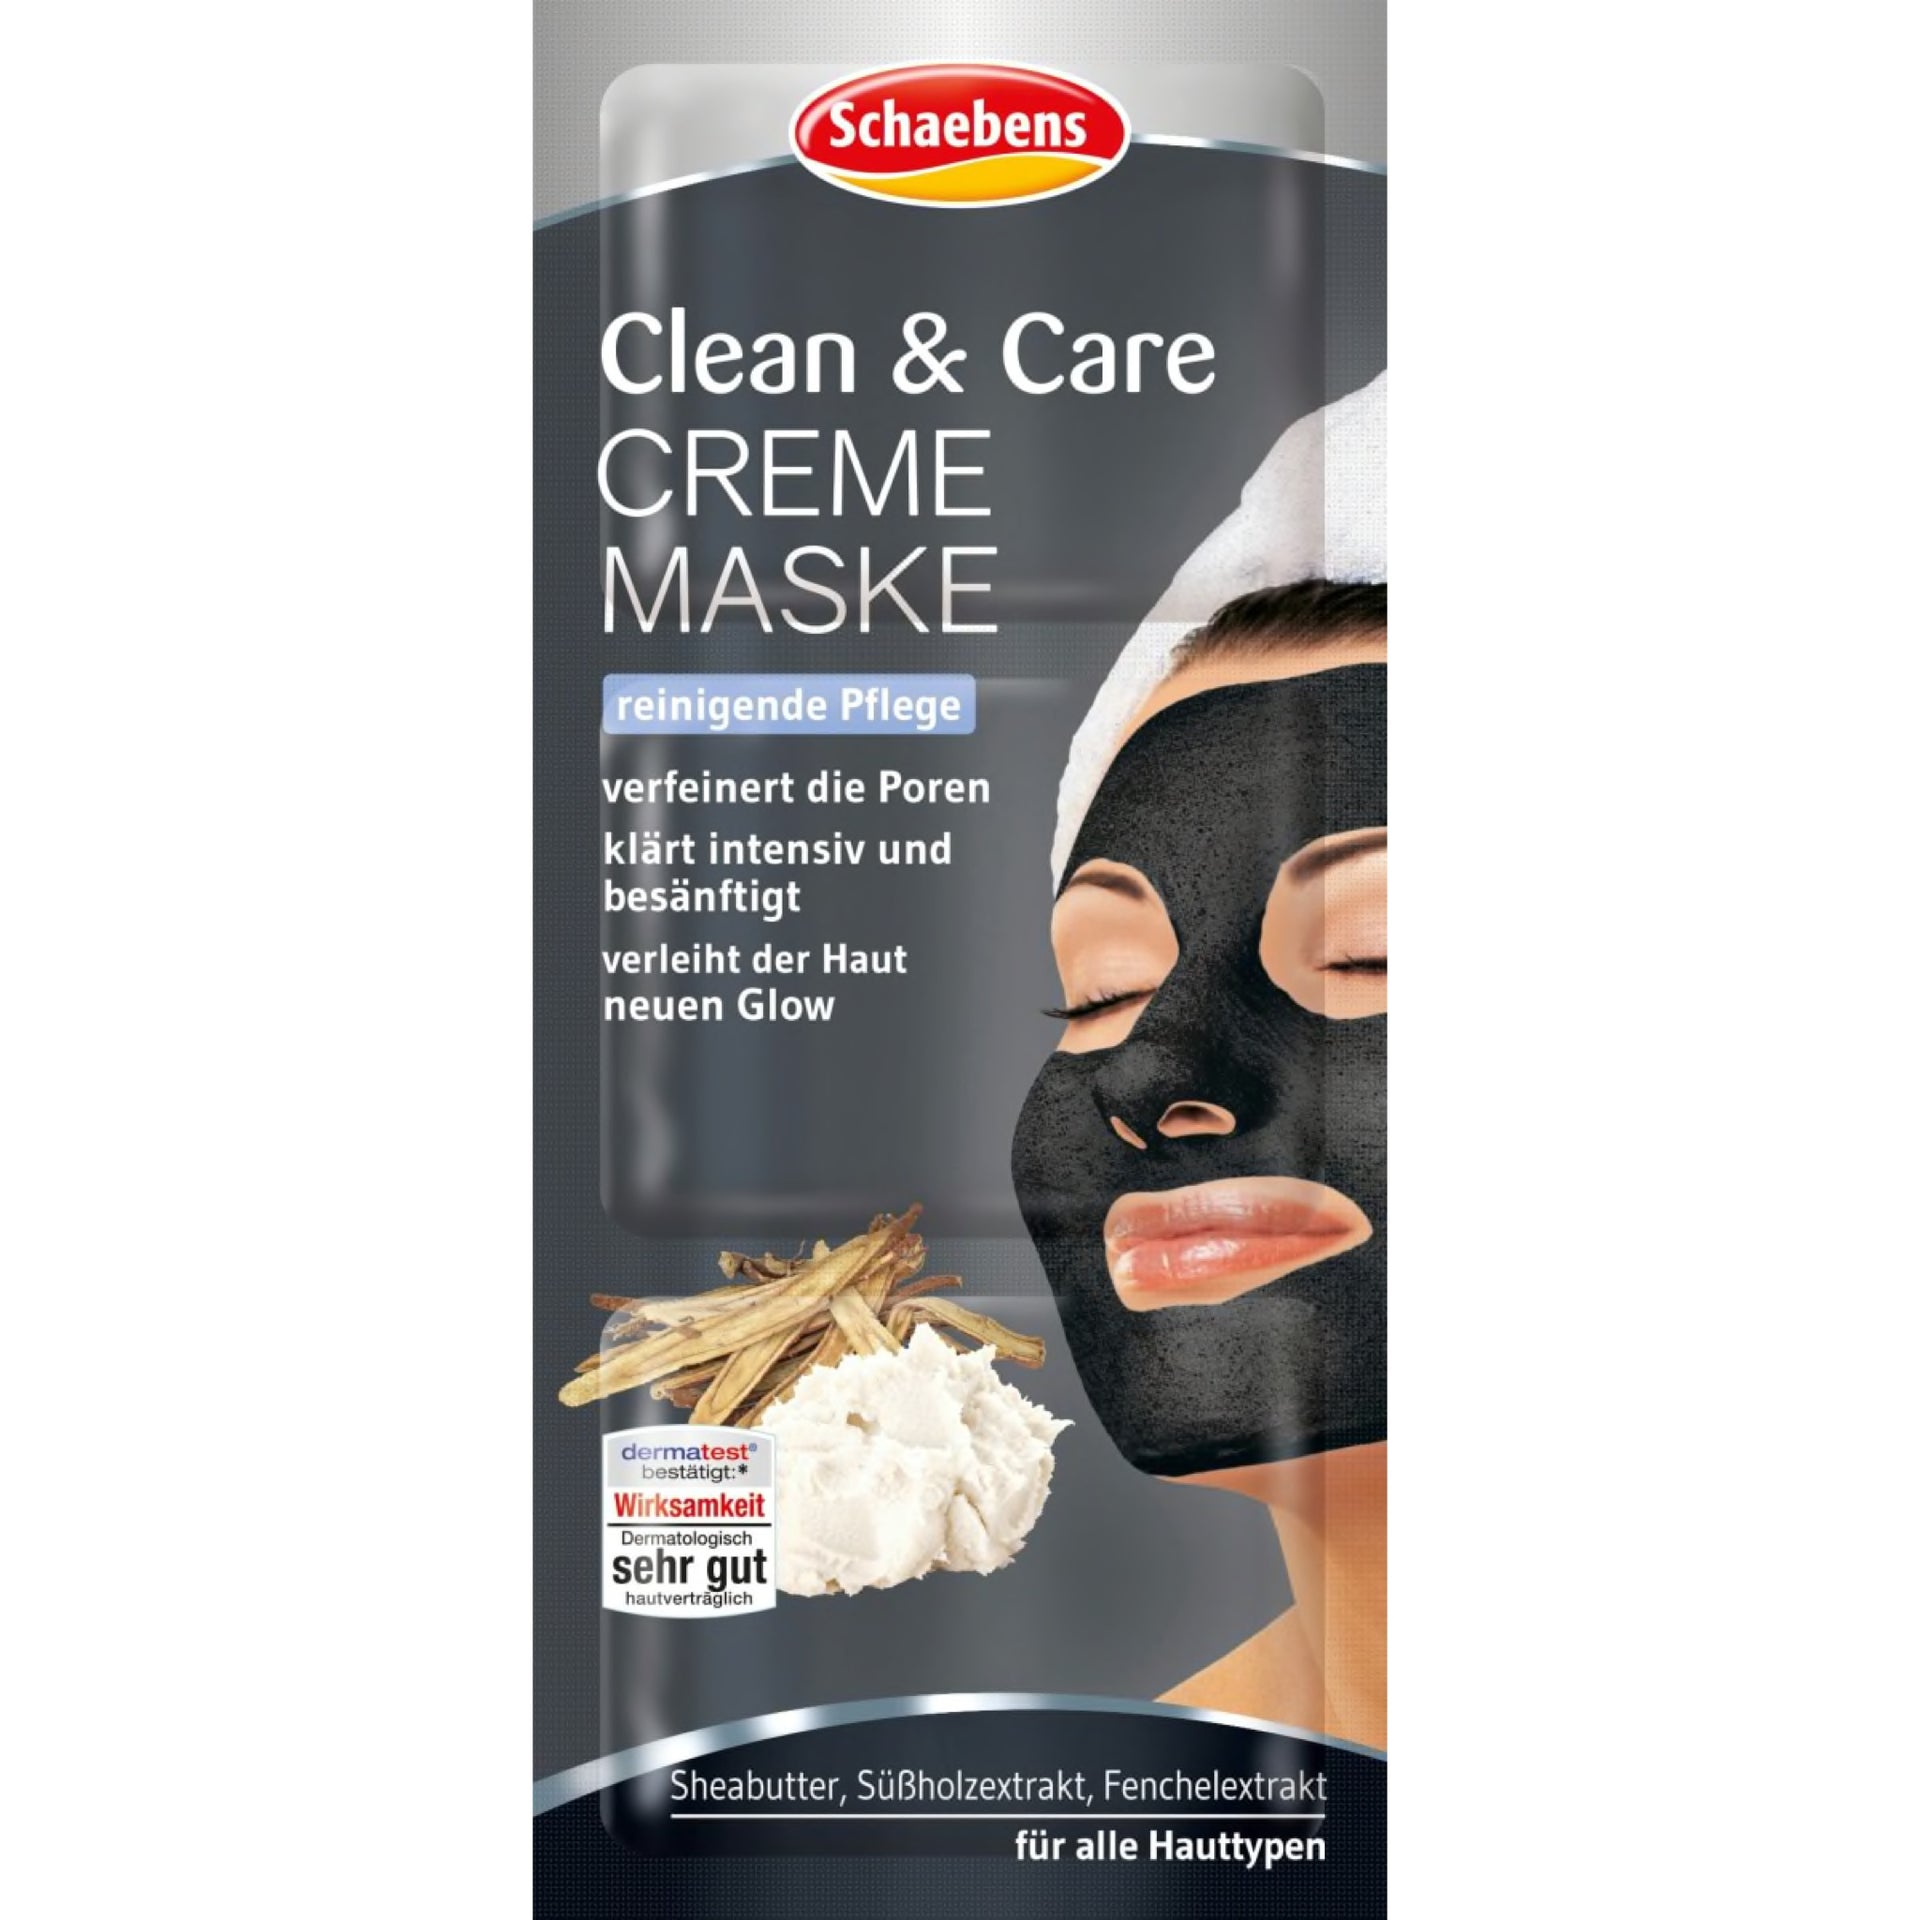 Schaebens Clean & Pure Maske Reviews